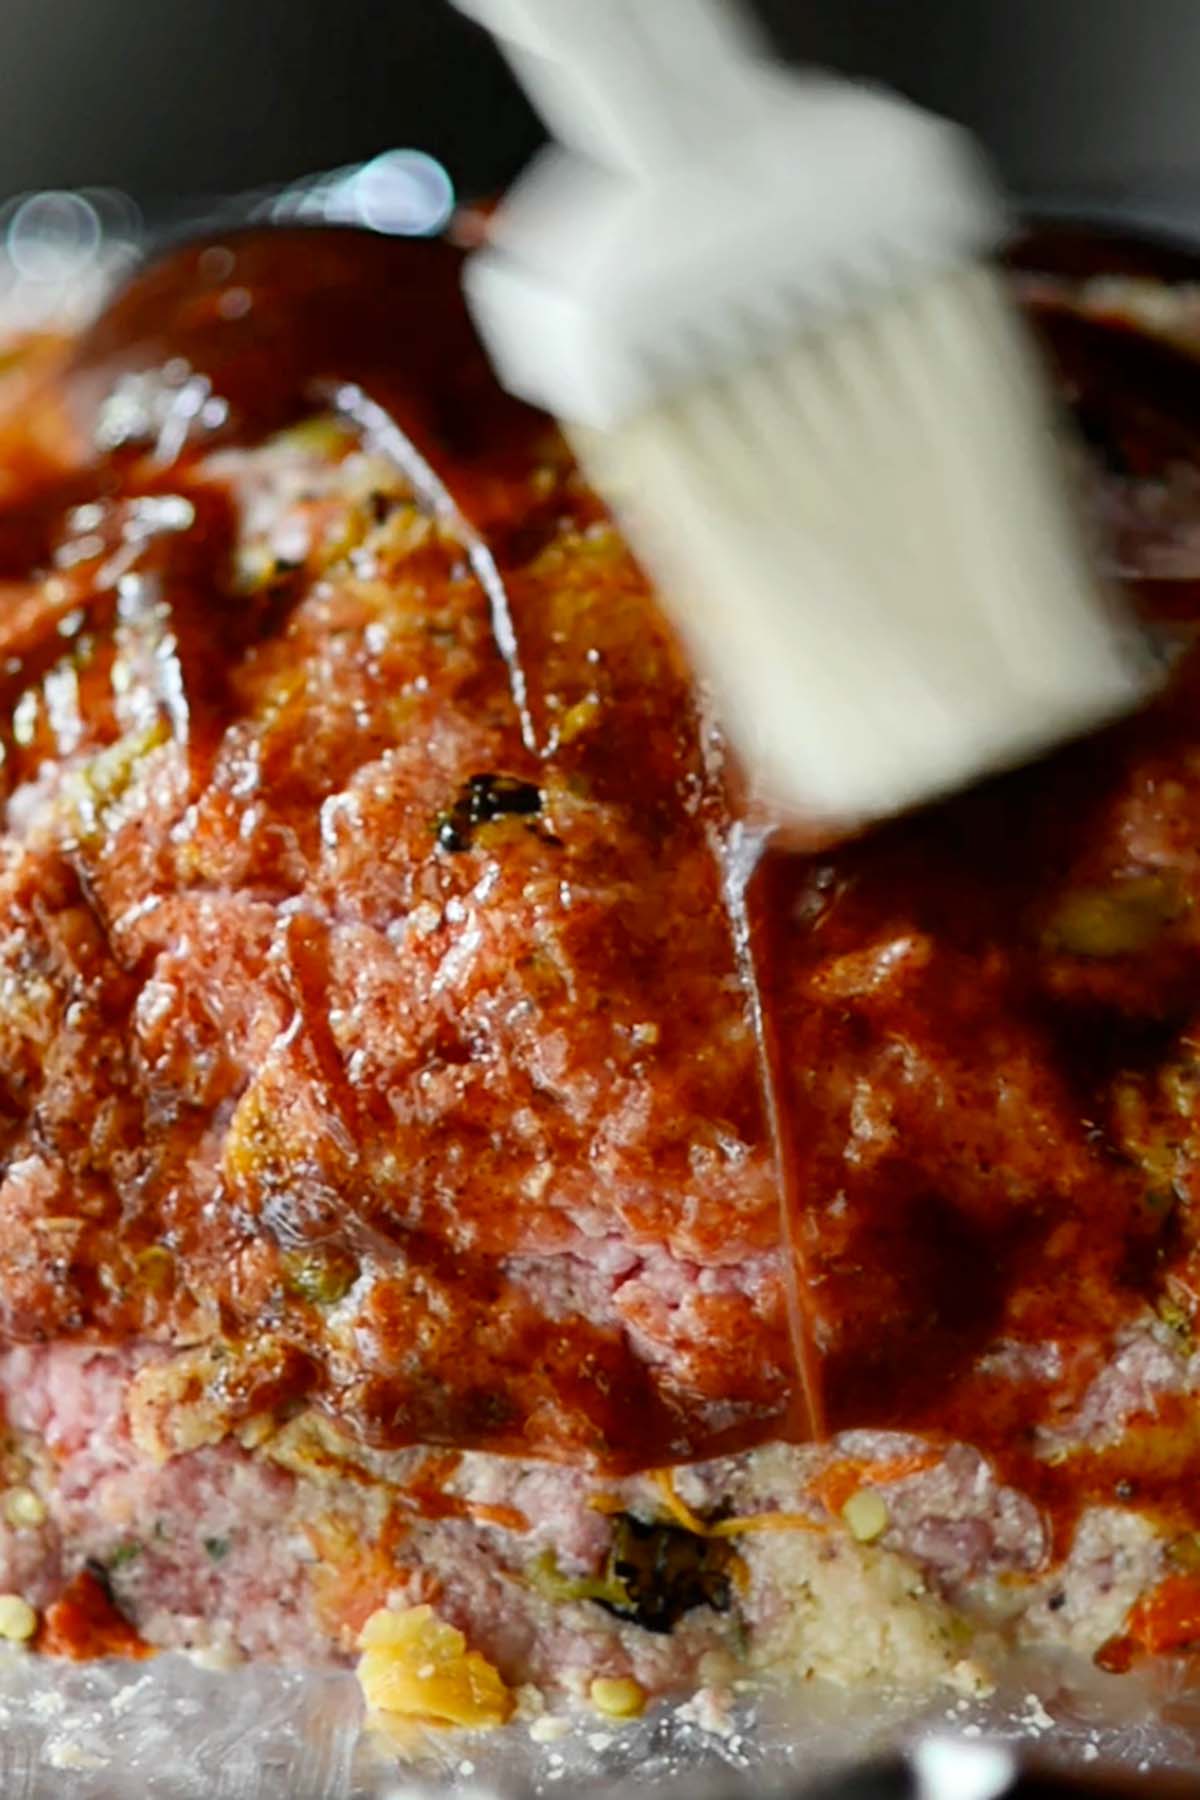 Ketchup based glaze being brushed over the top of meatloaf.